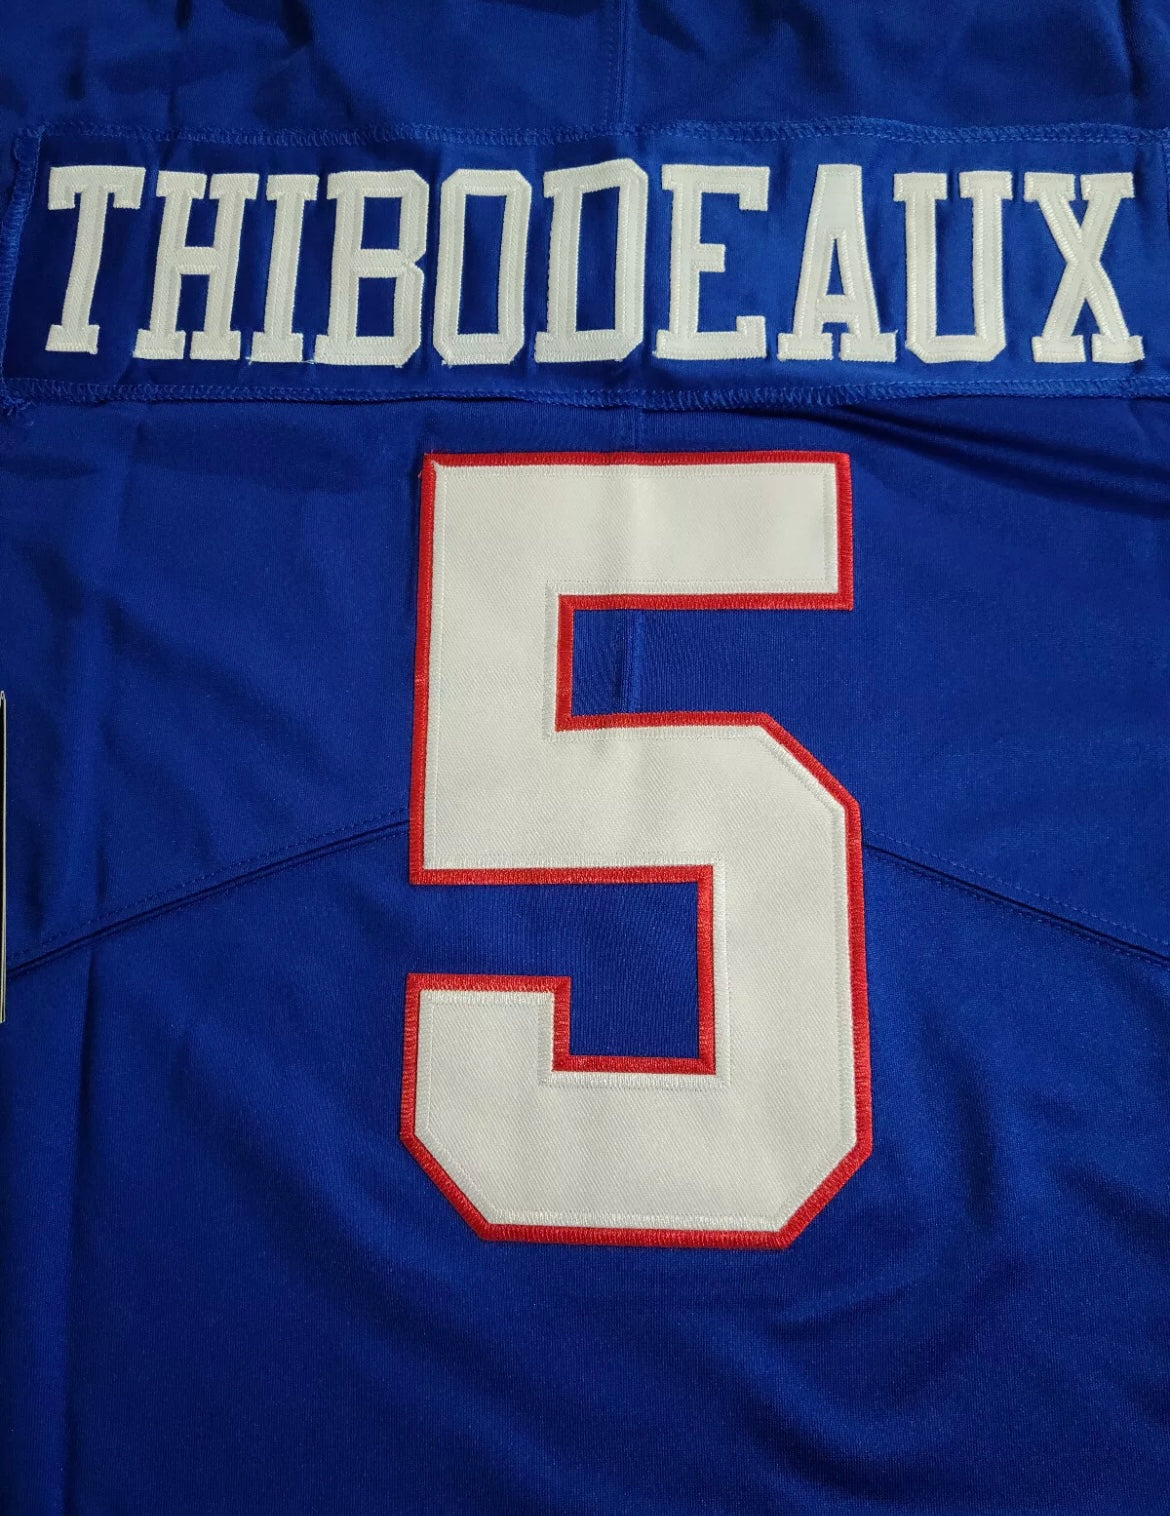 Kayvon Thibodeaux New York Giants Nike Throwback Classic NFL Vapor Limited Jersey - Blue